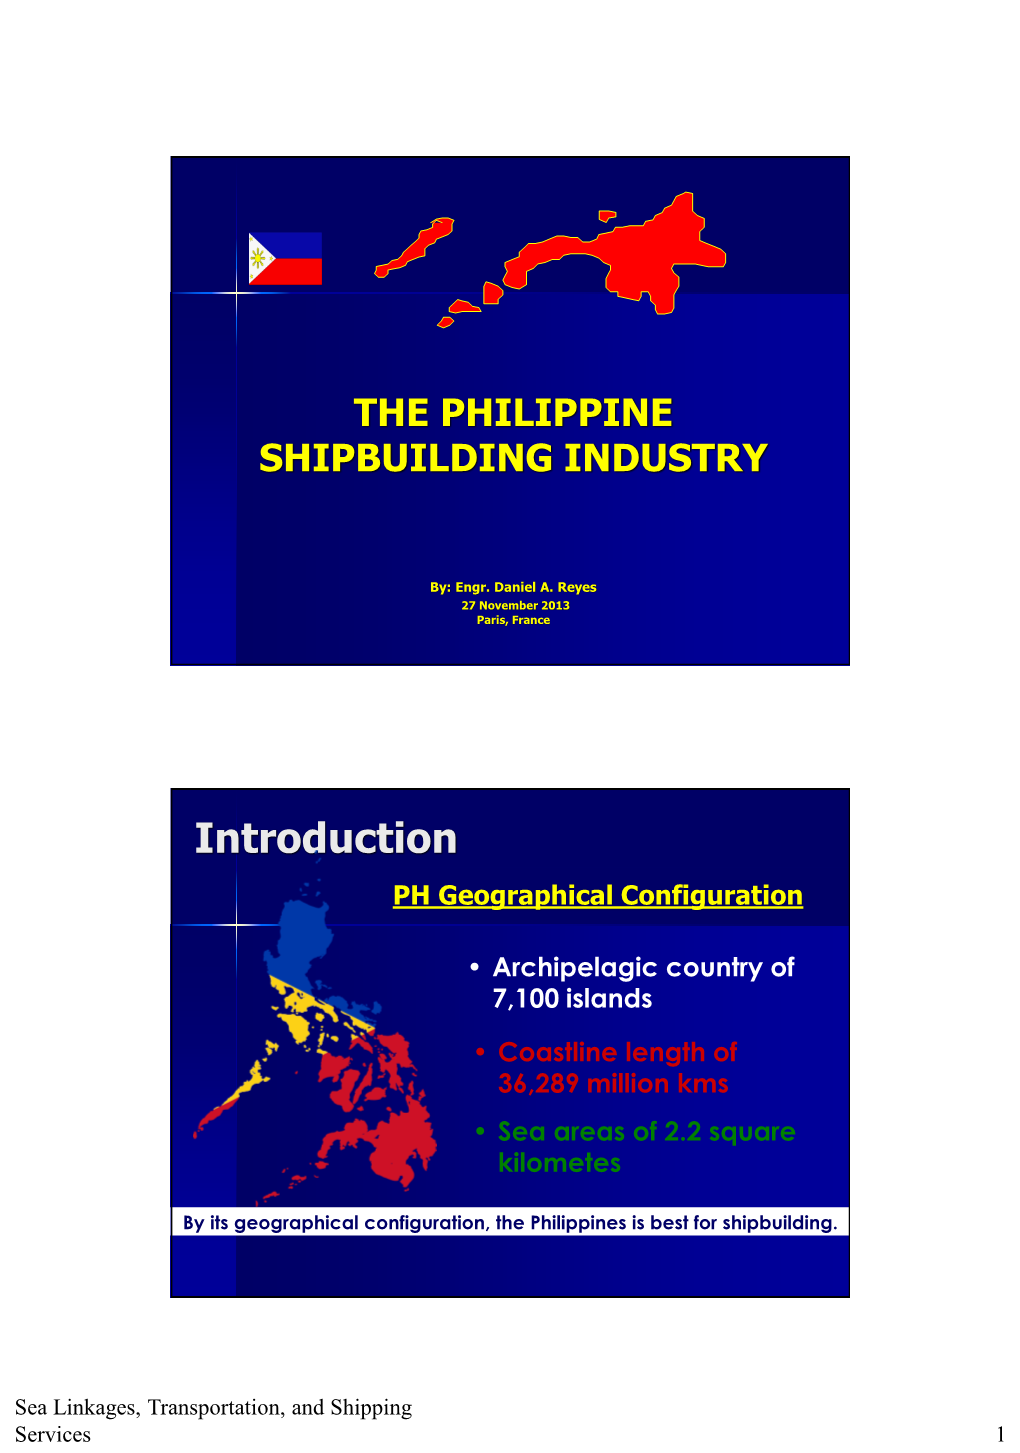 The Philippine Shipbuilding Industry